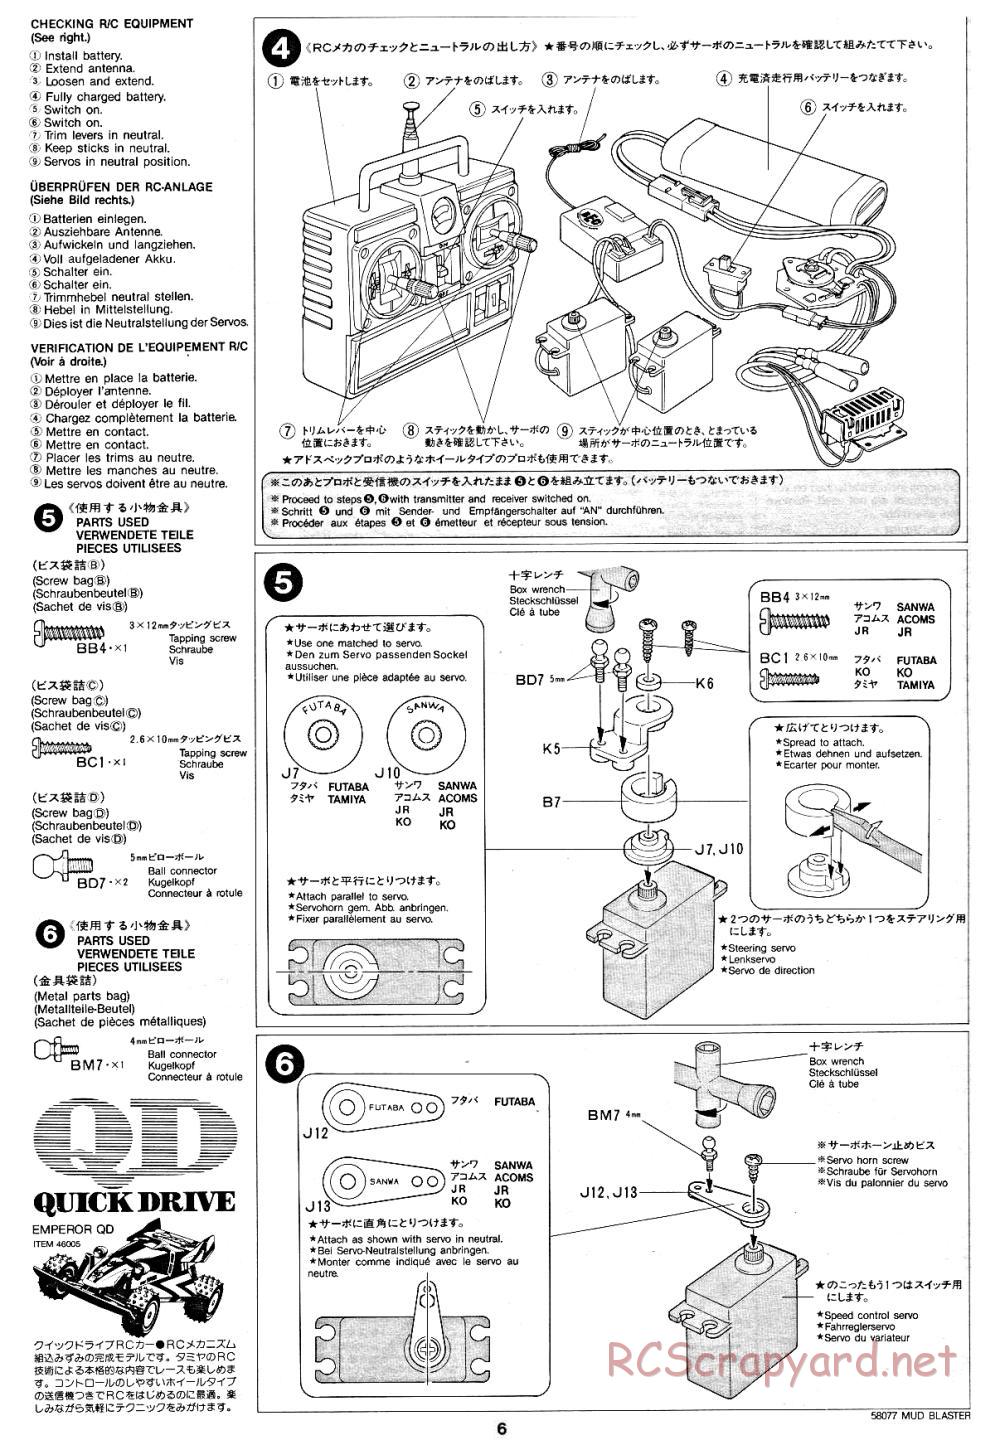 Tamiya - Mud Blaster - 58077 - Manual - Page 6